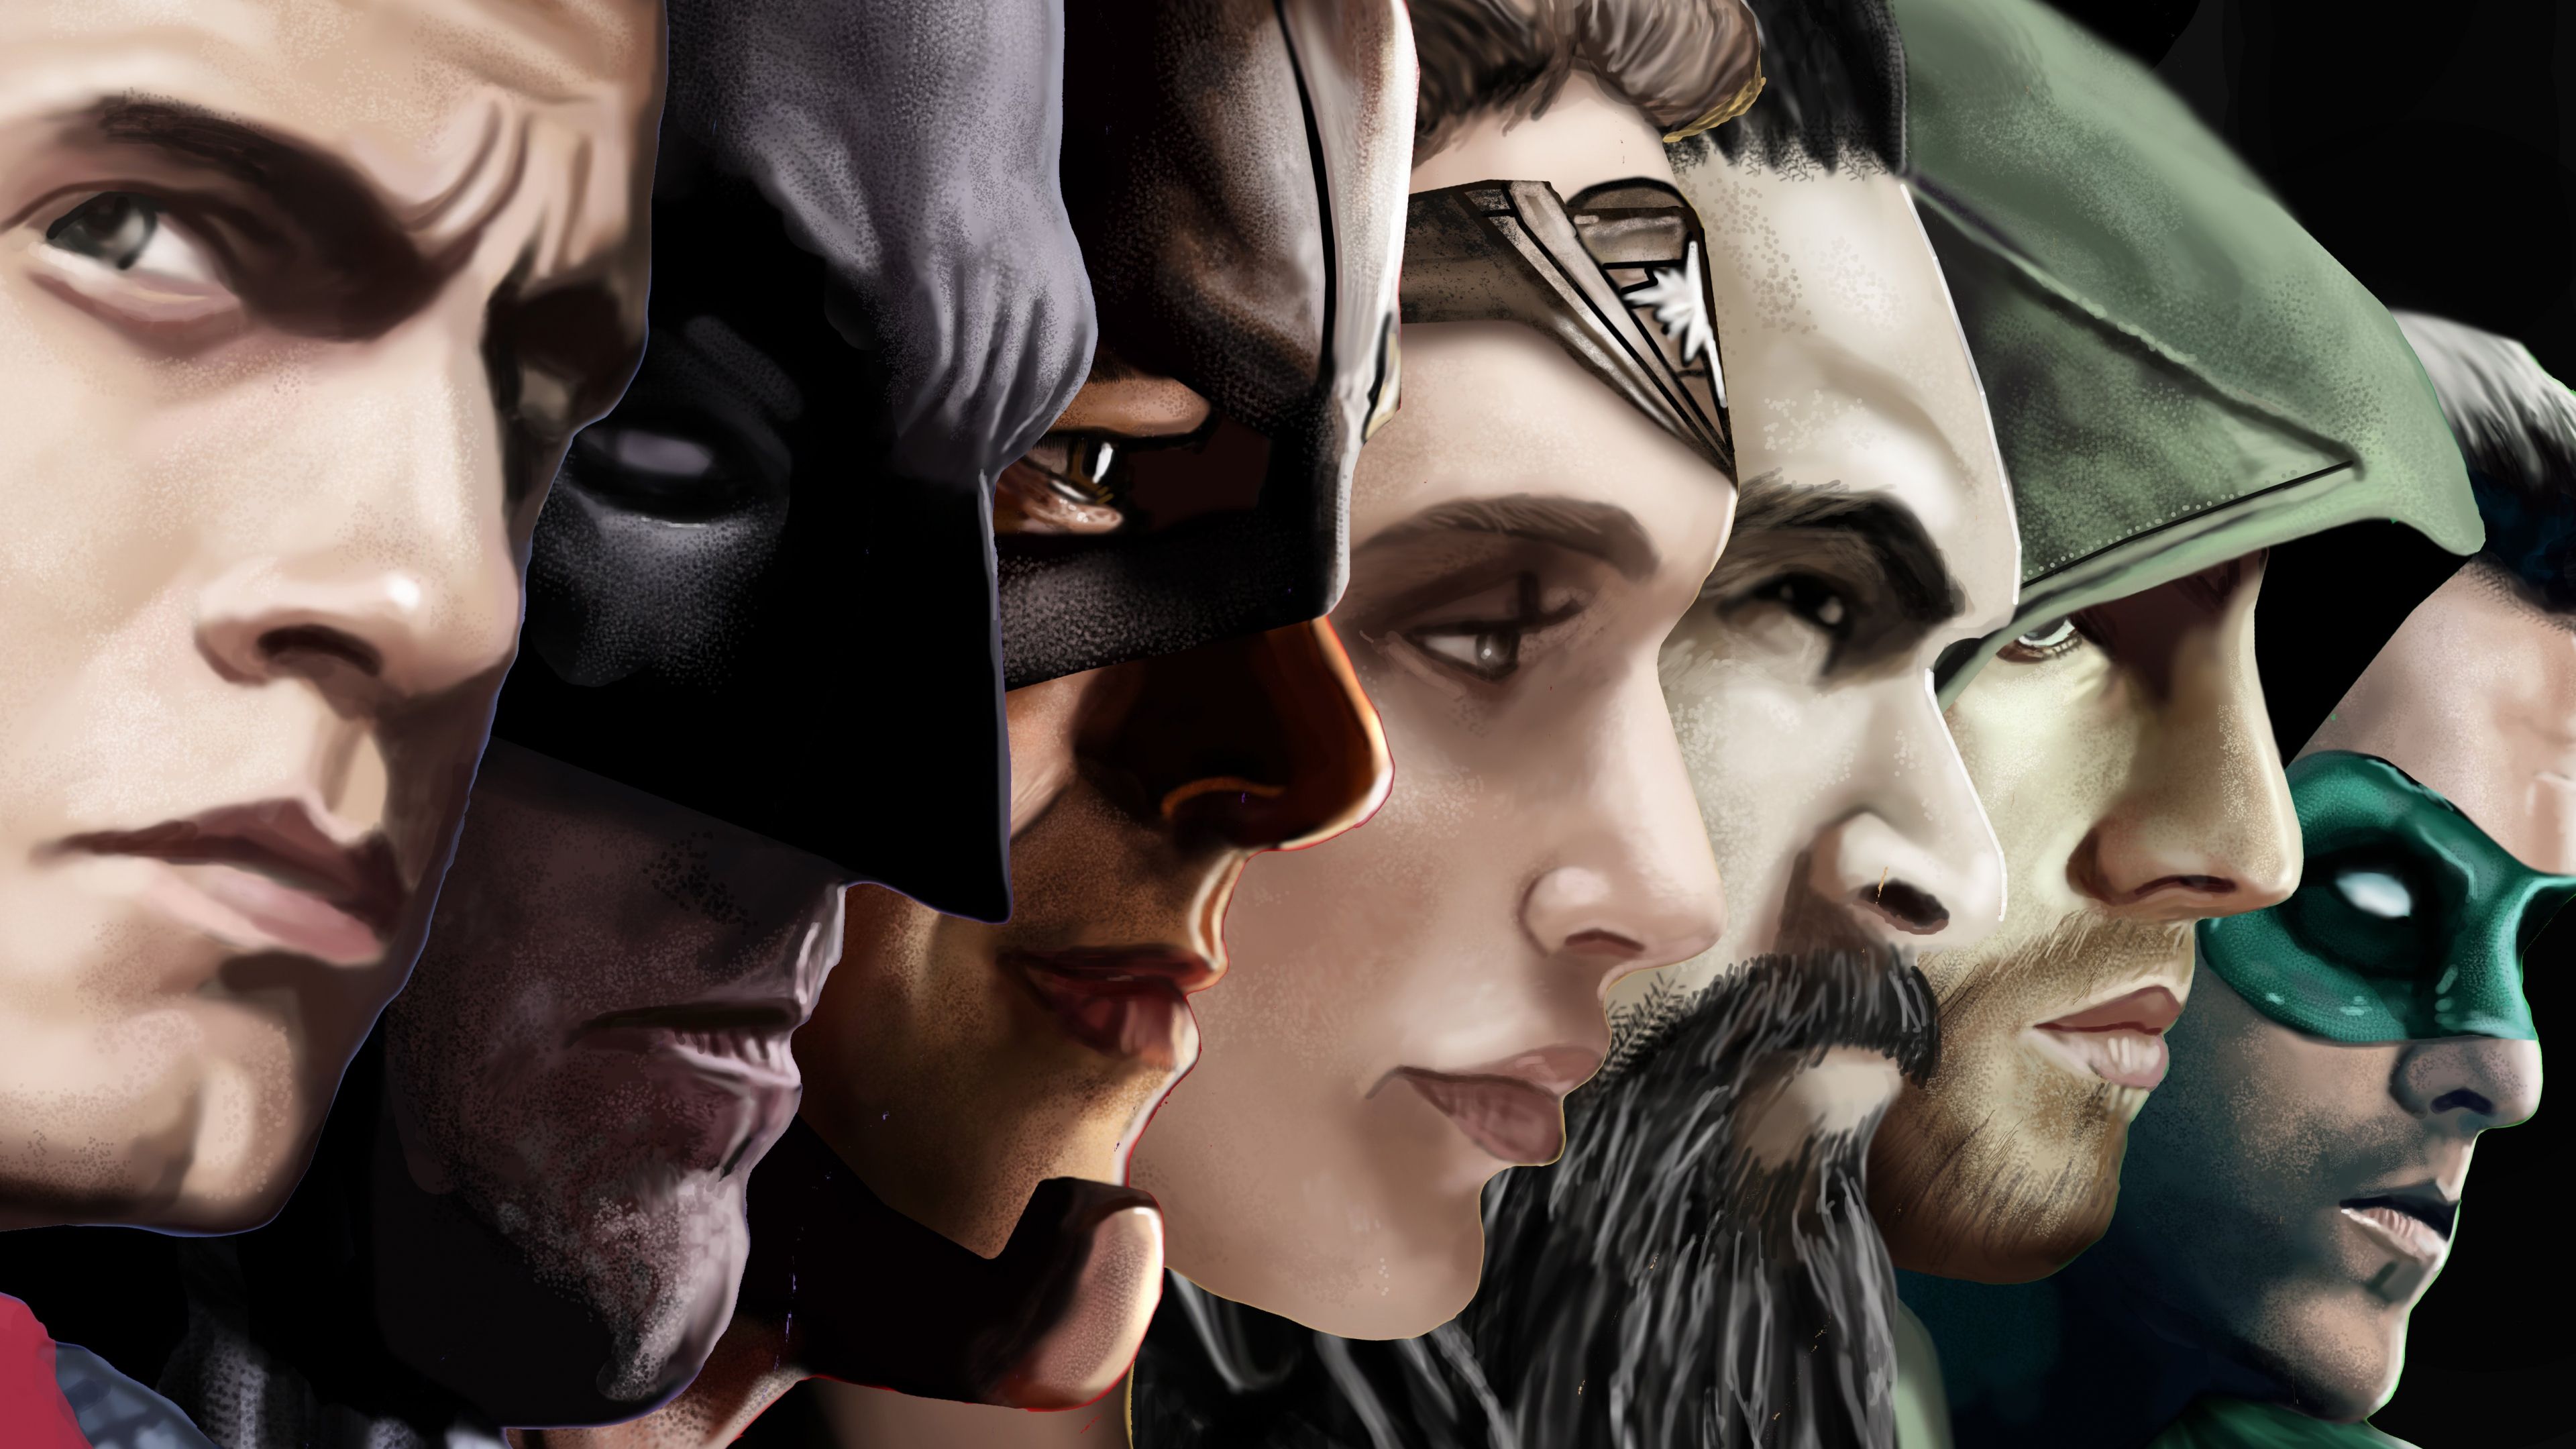 Desktop Wallpaper Justice League Superheroes Artwork, HD Image, Picture, Background, Uhruid